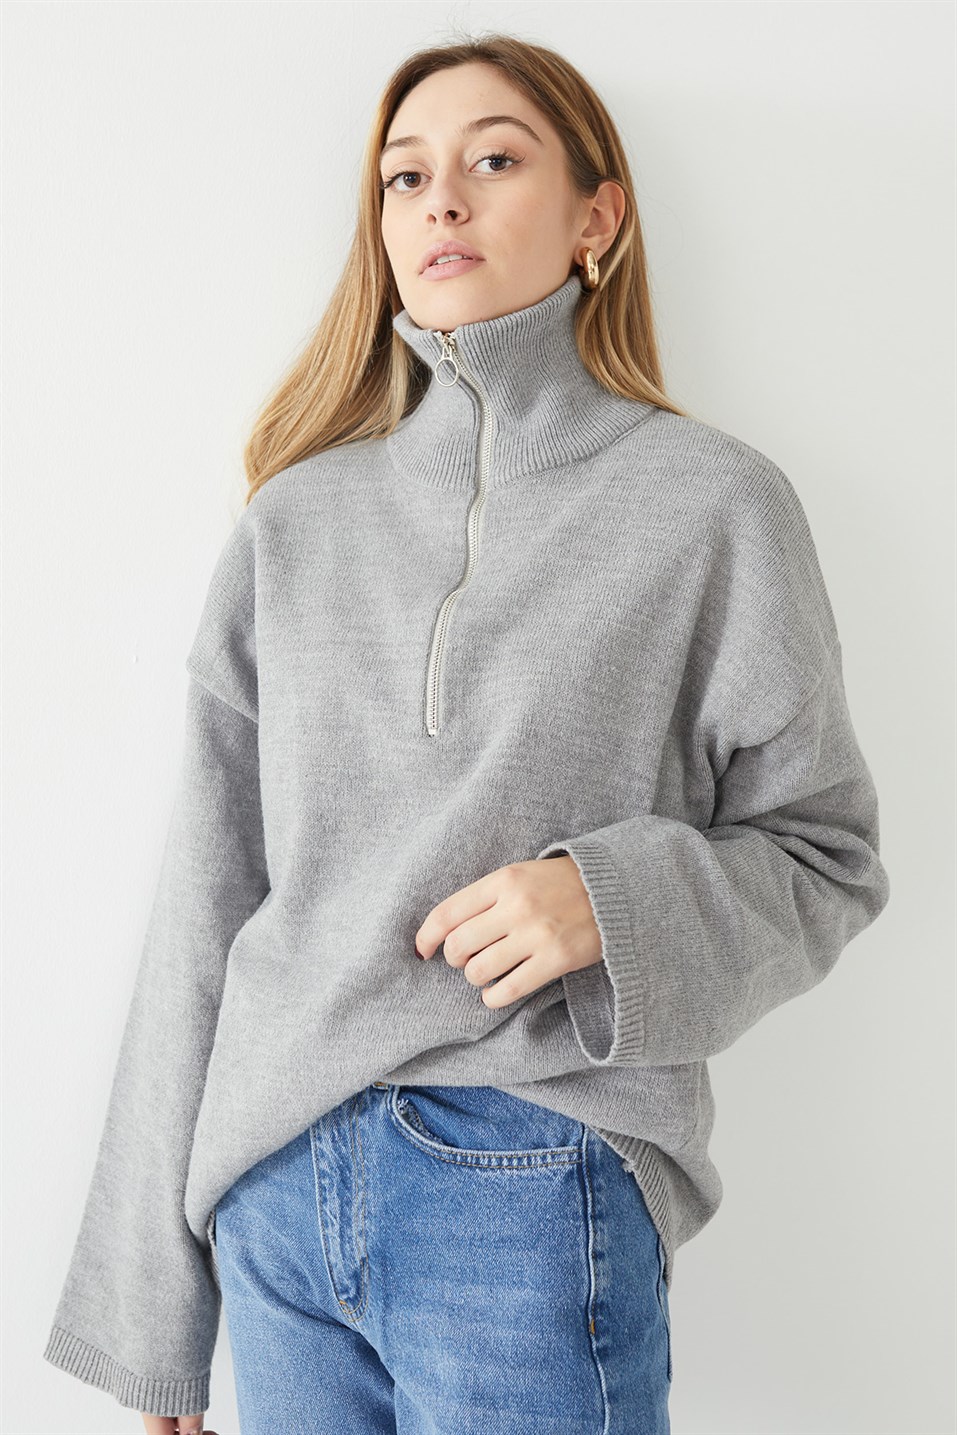 Gray Zippered Knitwear Sweater